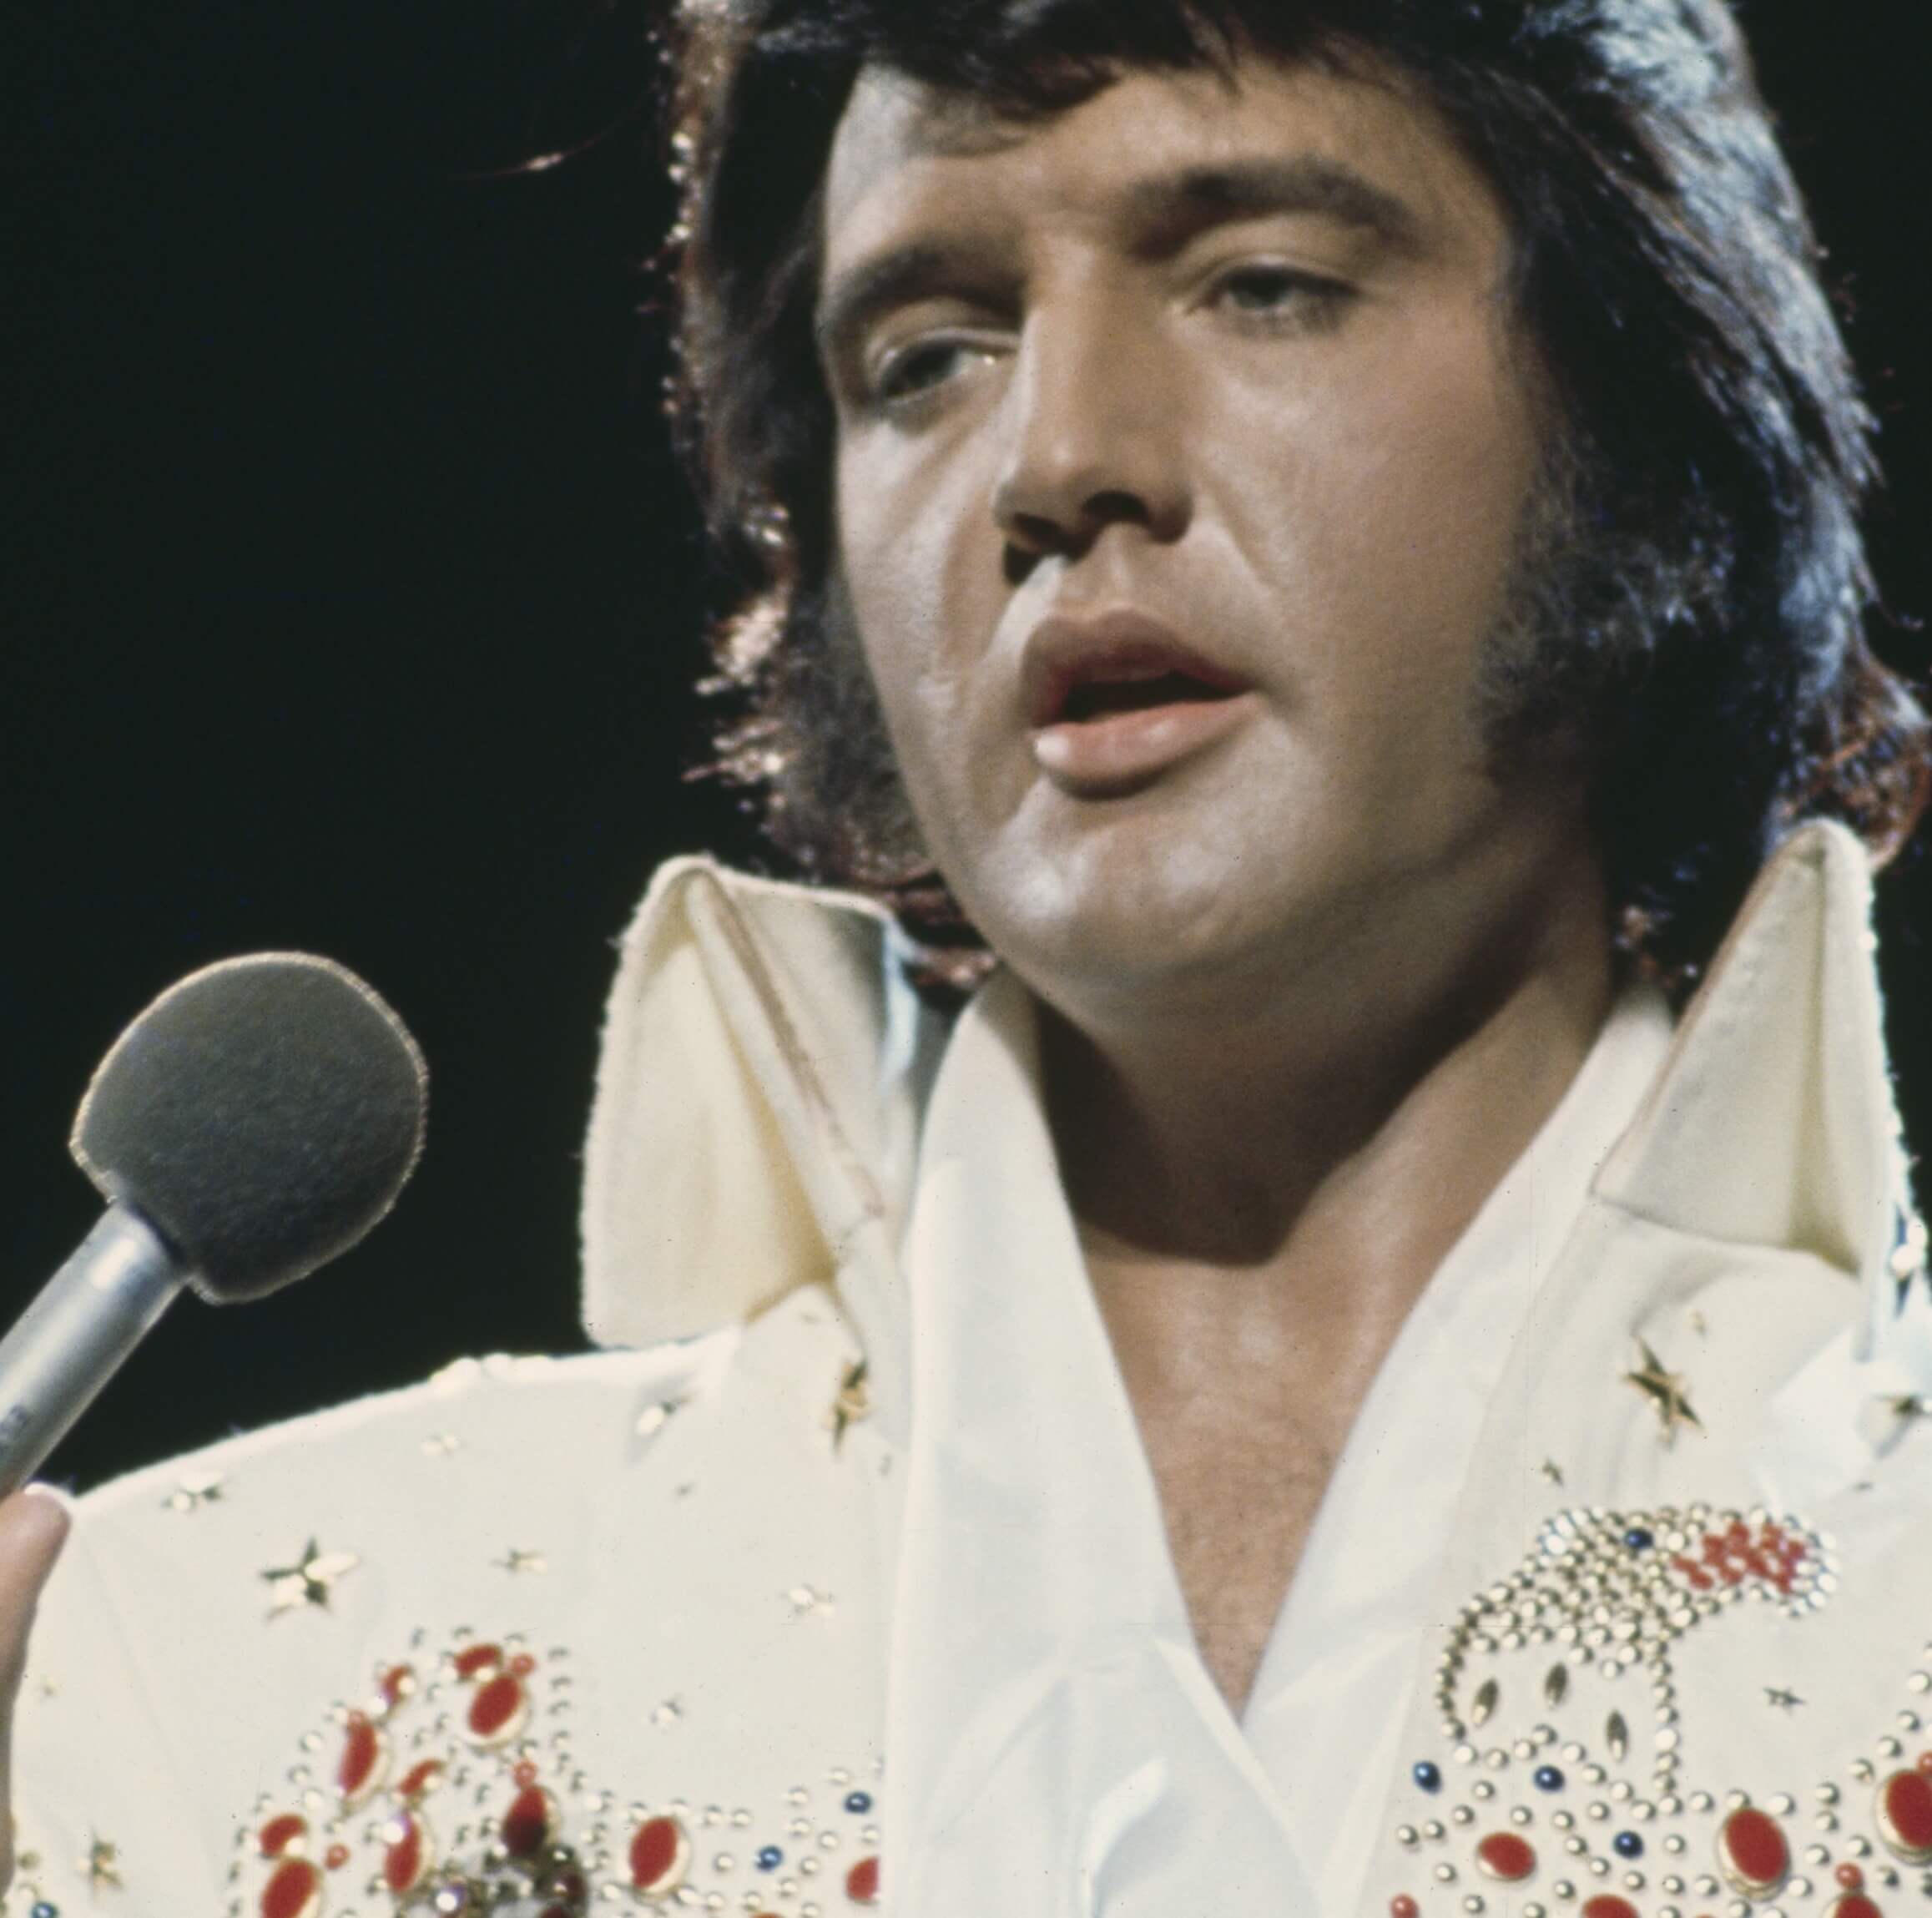 "Rubberneckin'" singer Elvis Presley wearing white